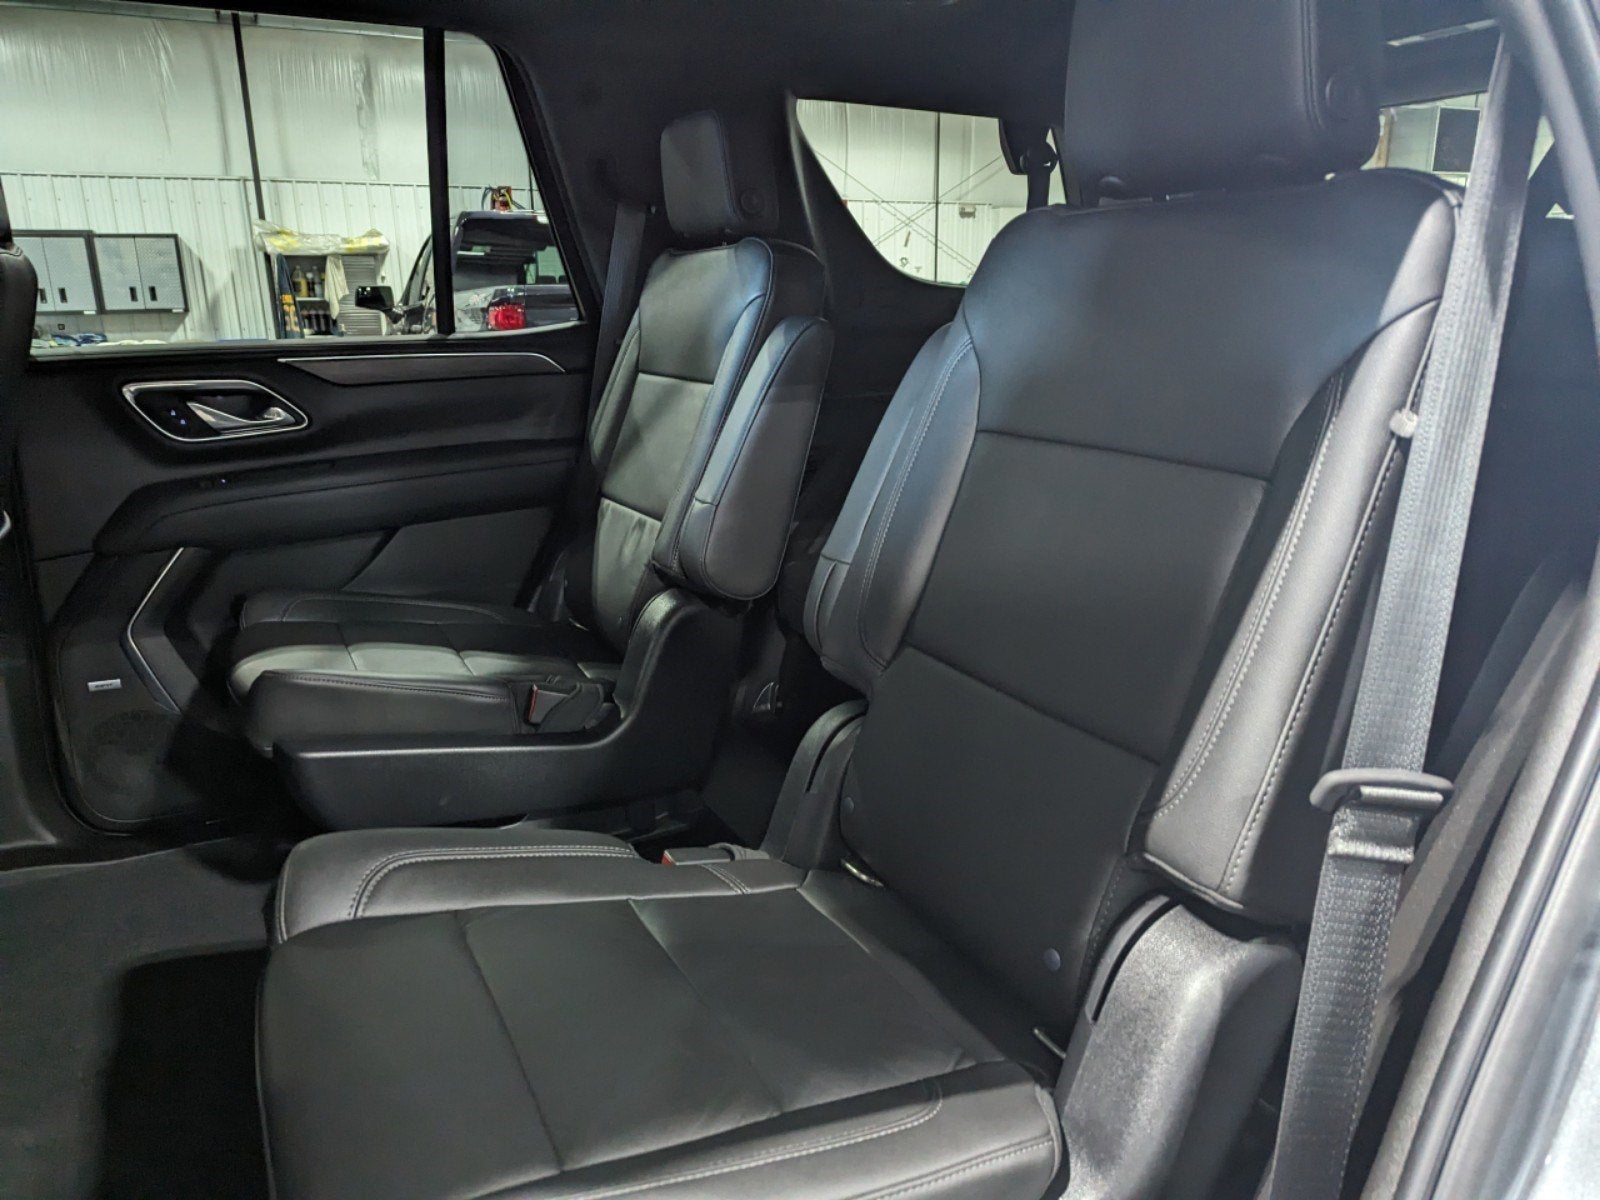 2021 Chevrolet Tahoe Z71 Premium Leather Heated Preferred Equipment Pkg Sunroof